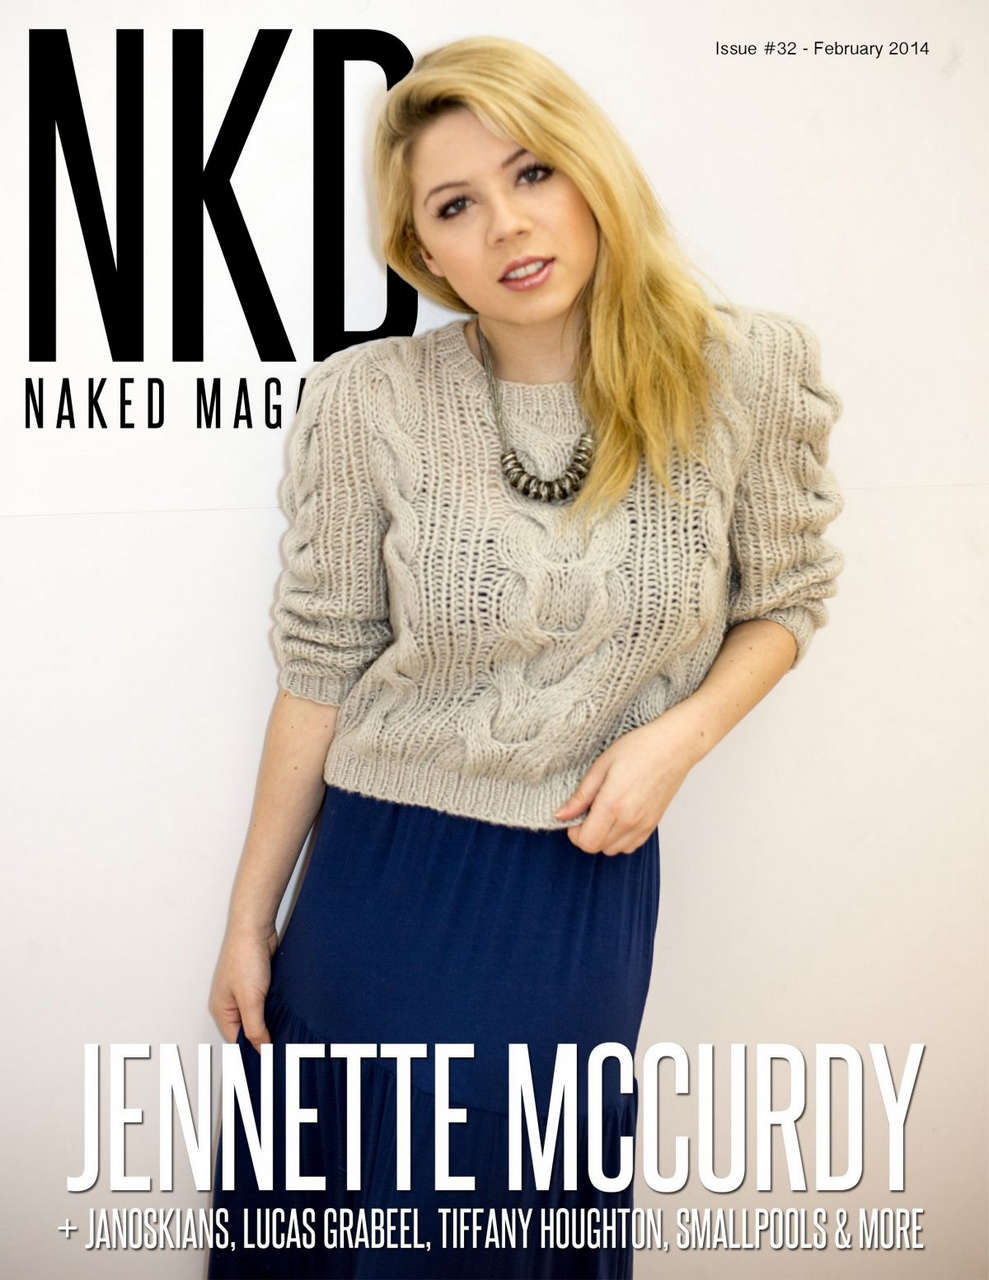 Jennette Mccurdy Nkd Magazine February 2014 Issue